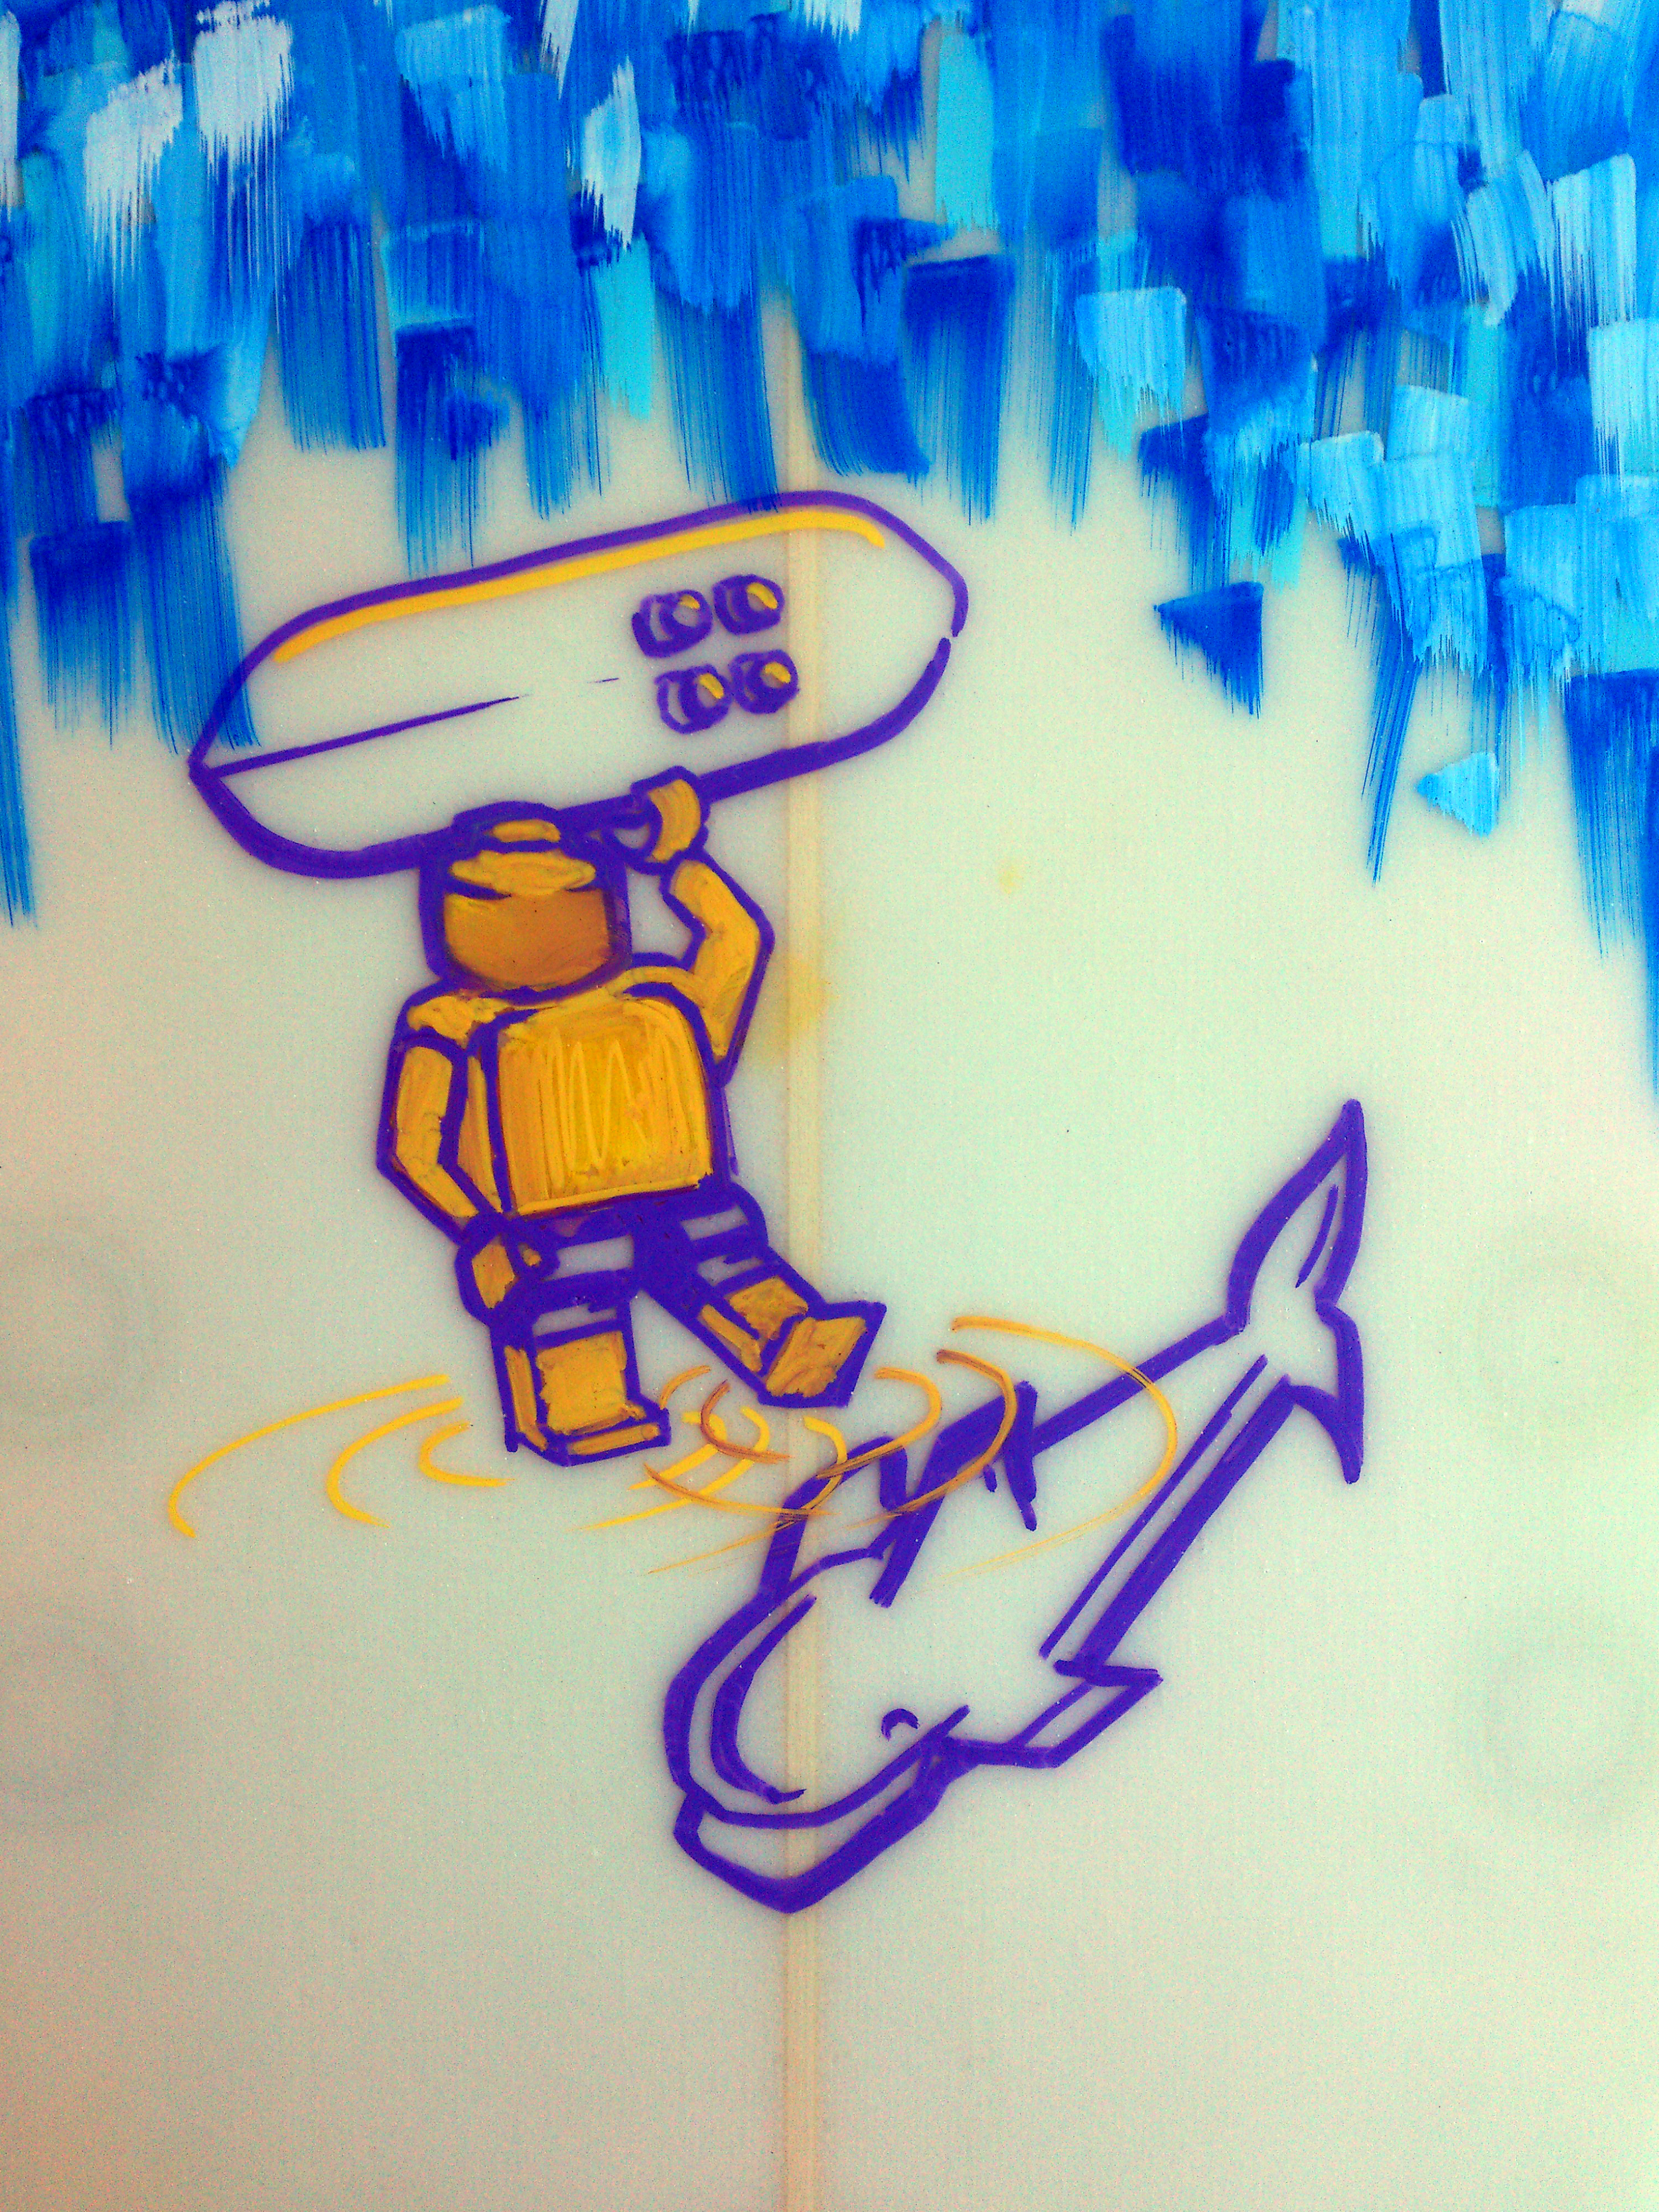 lego-surfboard-illustration-samshennan-sam-shennan-ud3-posca-handmade-handpainted-yellow-purple.jpg